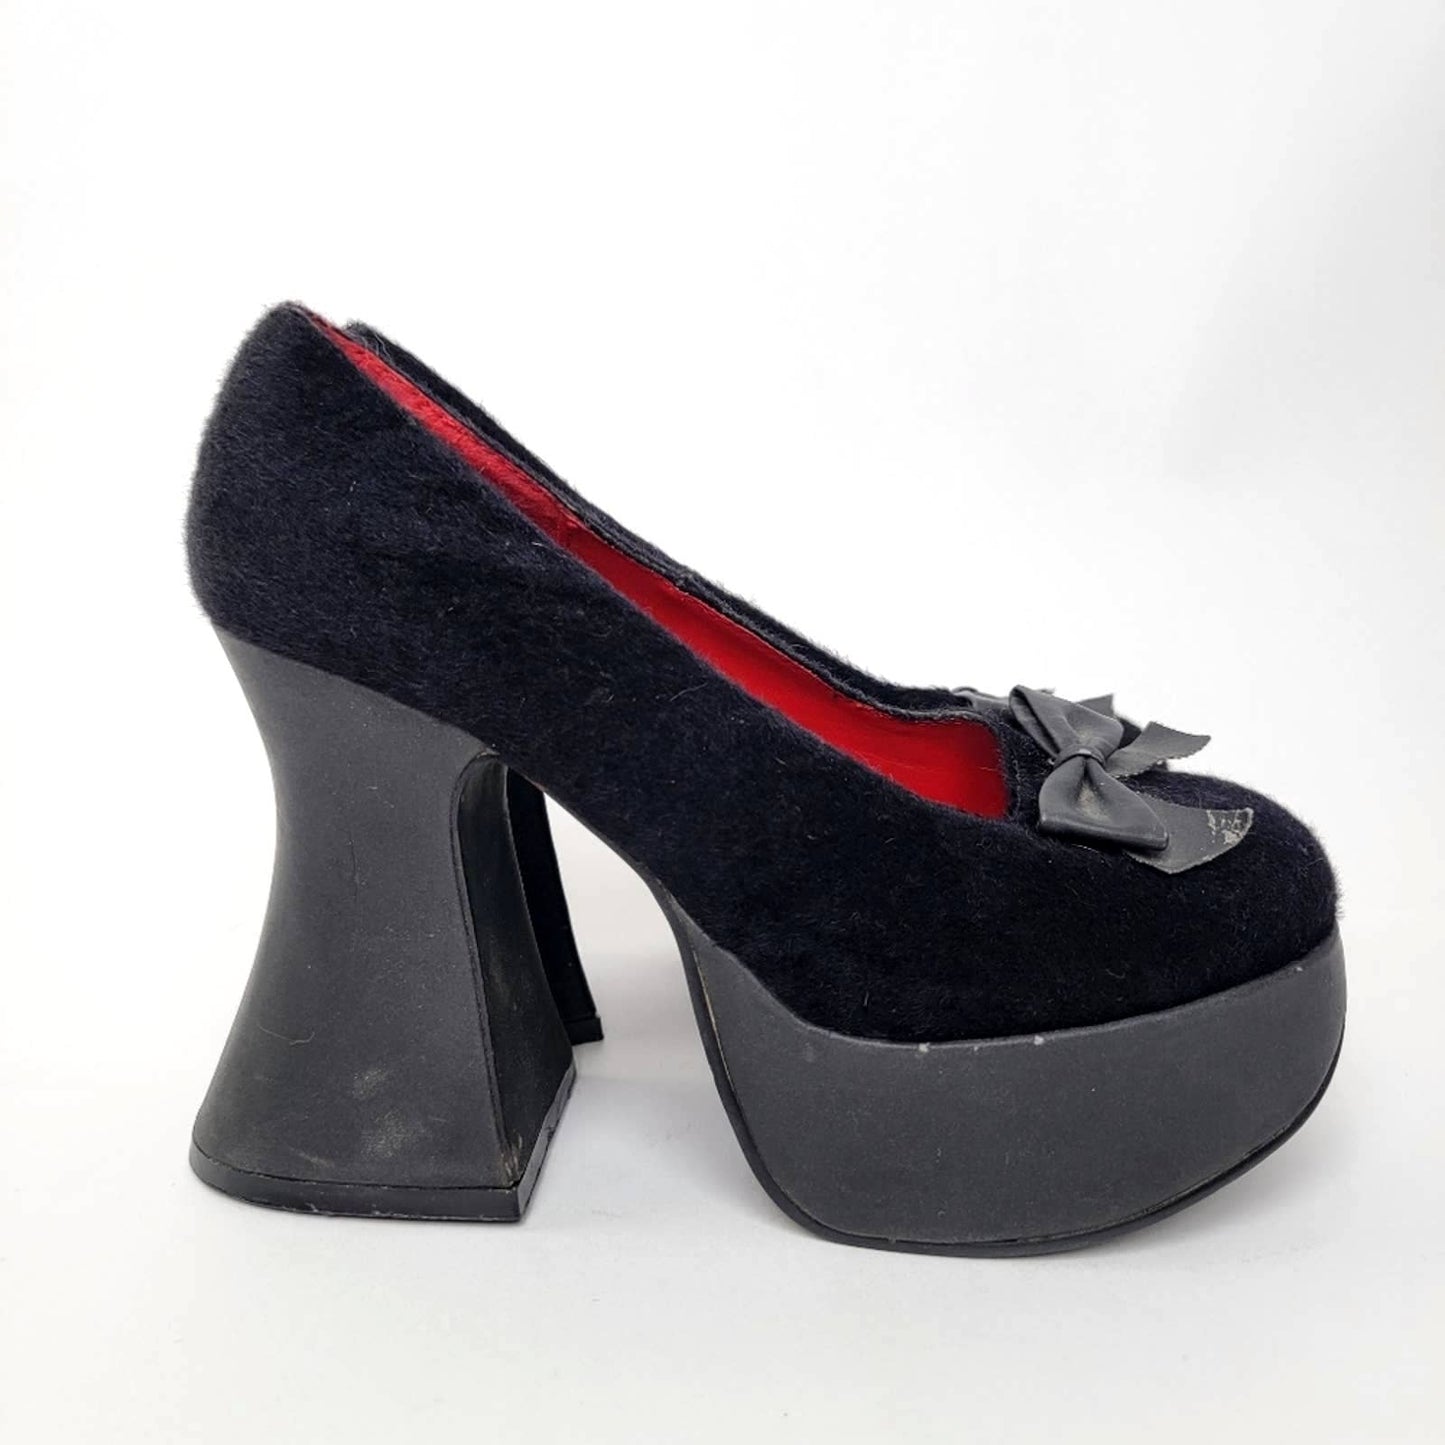 Vintage 90s Morbid Threads Goth High Heel Platform Witchy Shoes - 8